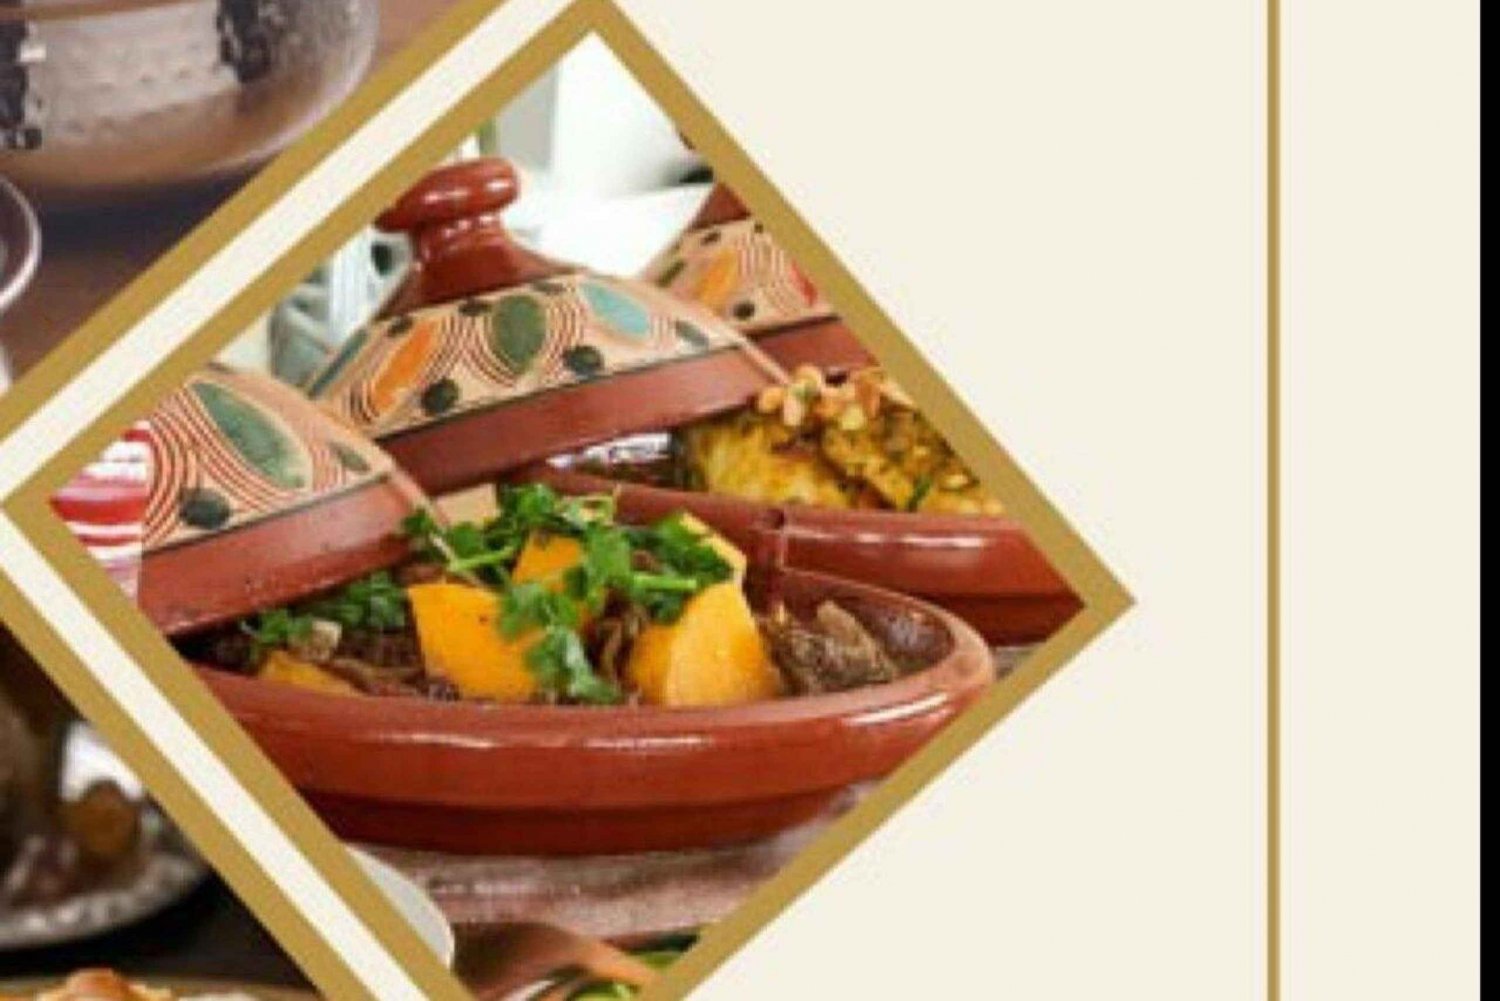 Las Américas, Tenerife: Traditionelt marokkansk køkken